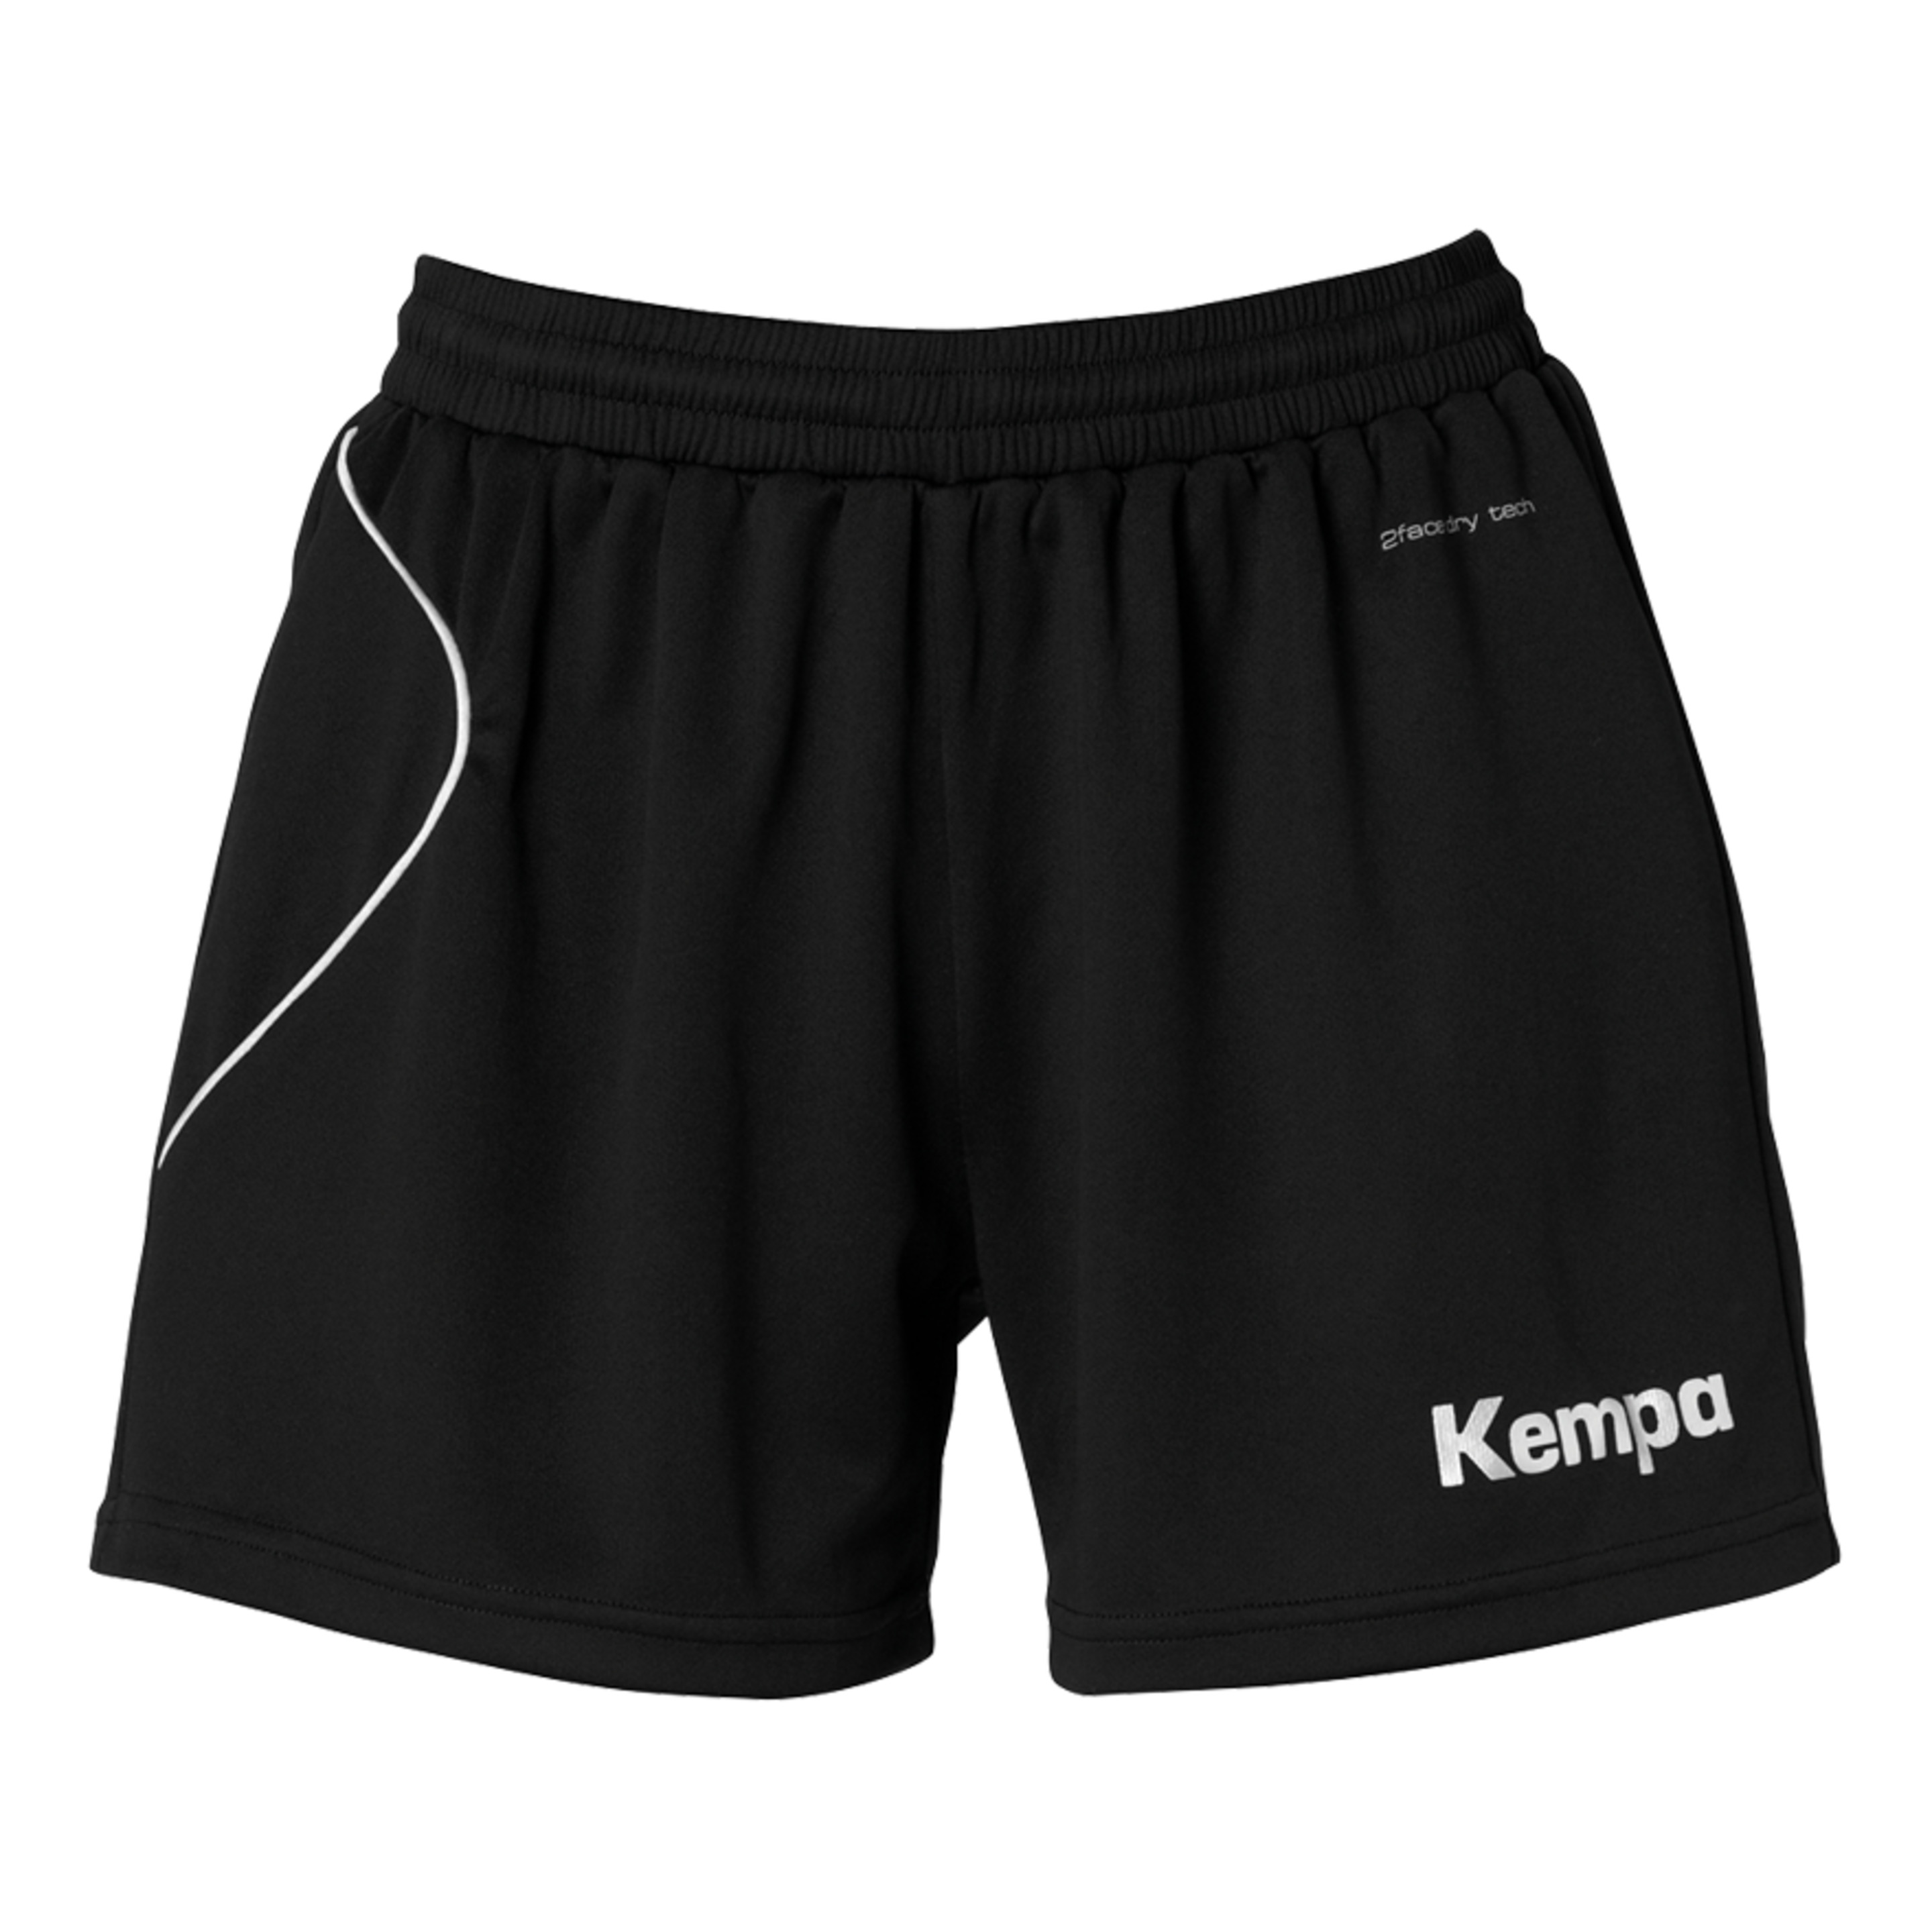 Curve Shorts De Mujer Negro/blanco Kempa - negro_blanco - Curve Shorts De Mujer Negro/blanco Kempa  MKP